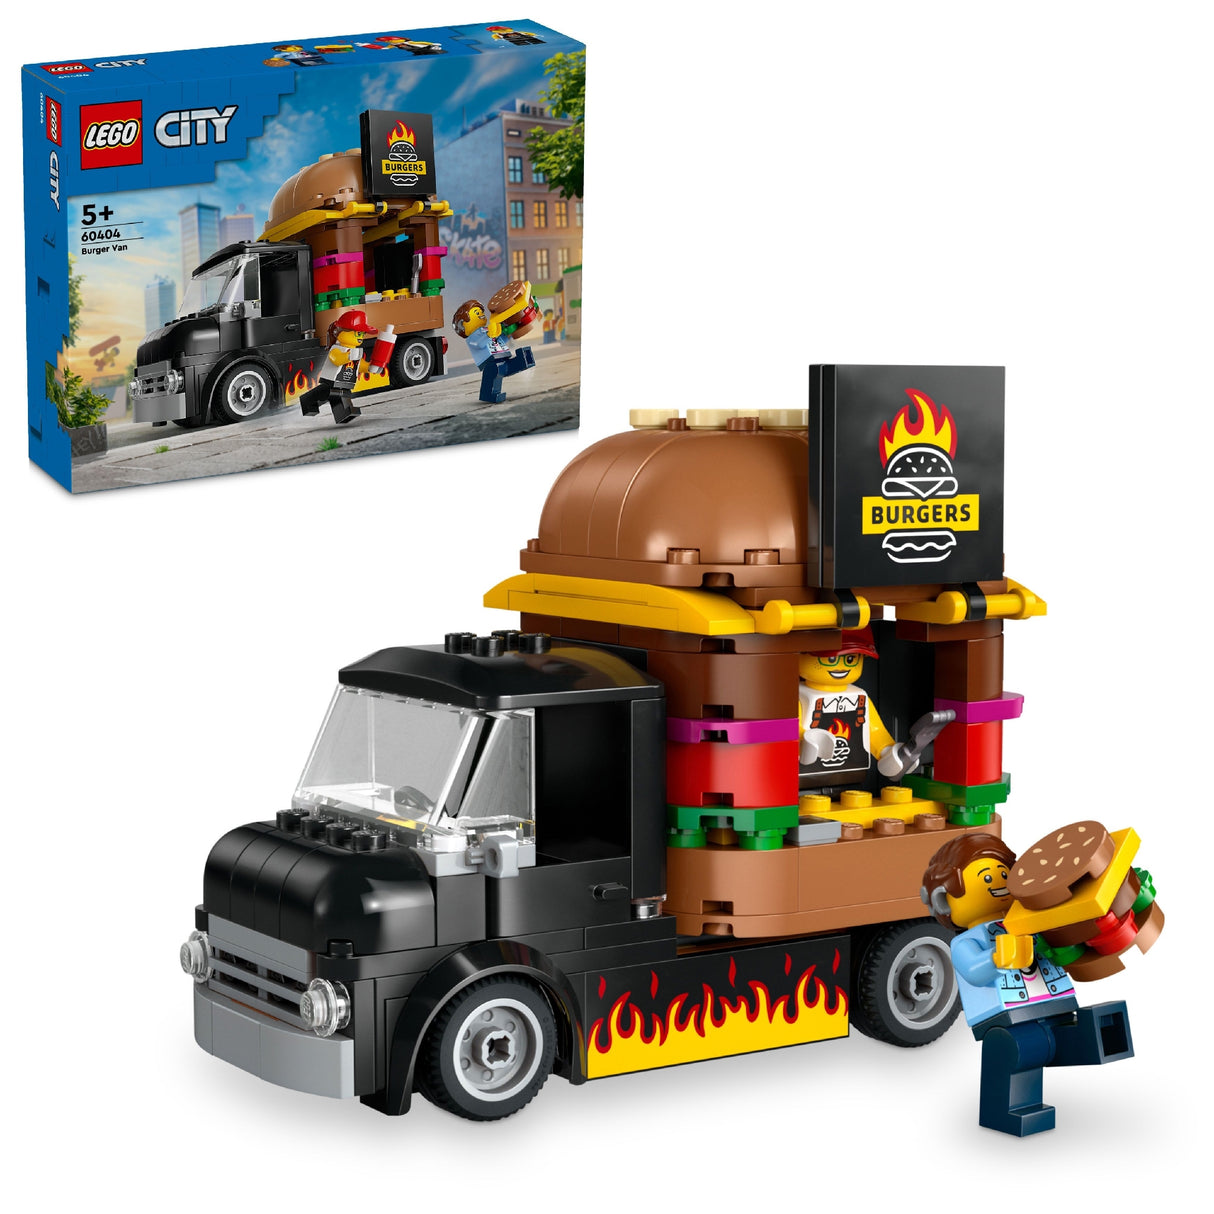 LEGO CITY BURGER TRUCK 60404 AGE: 5+